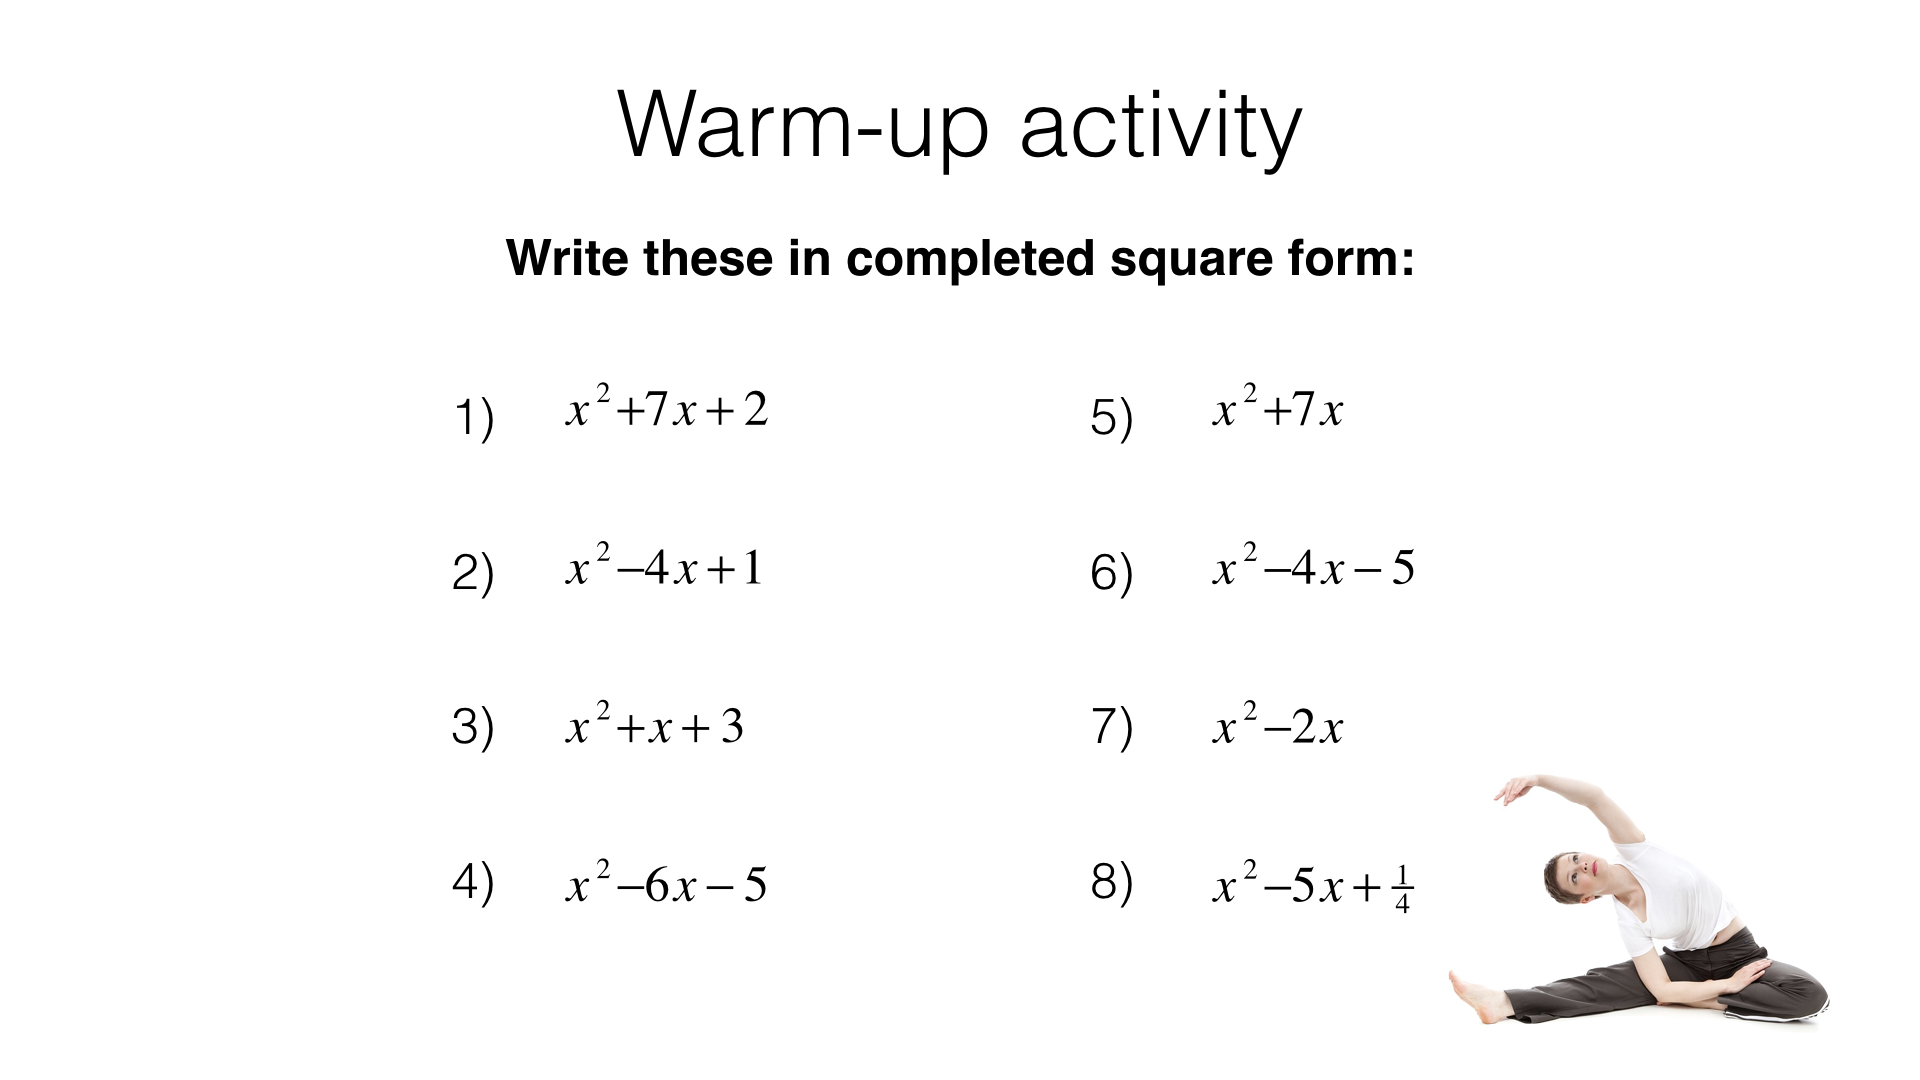 solving quadratic equations by quadratic formula practice problems